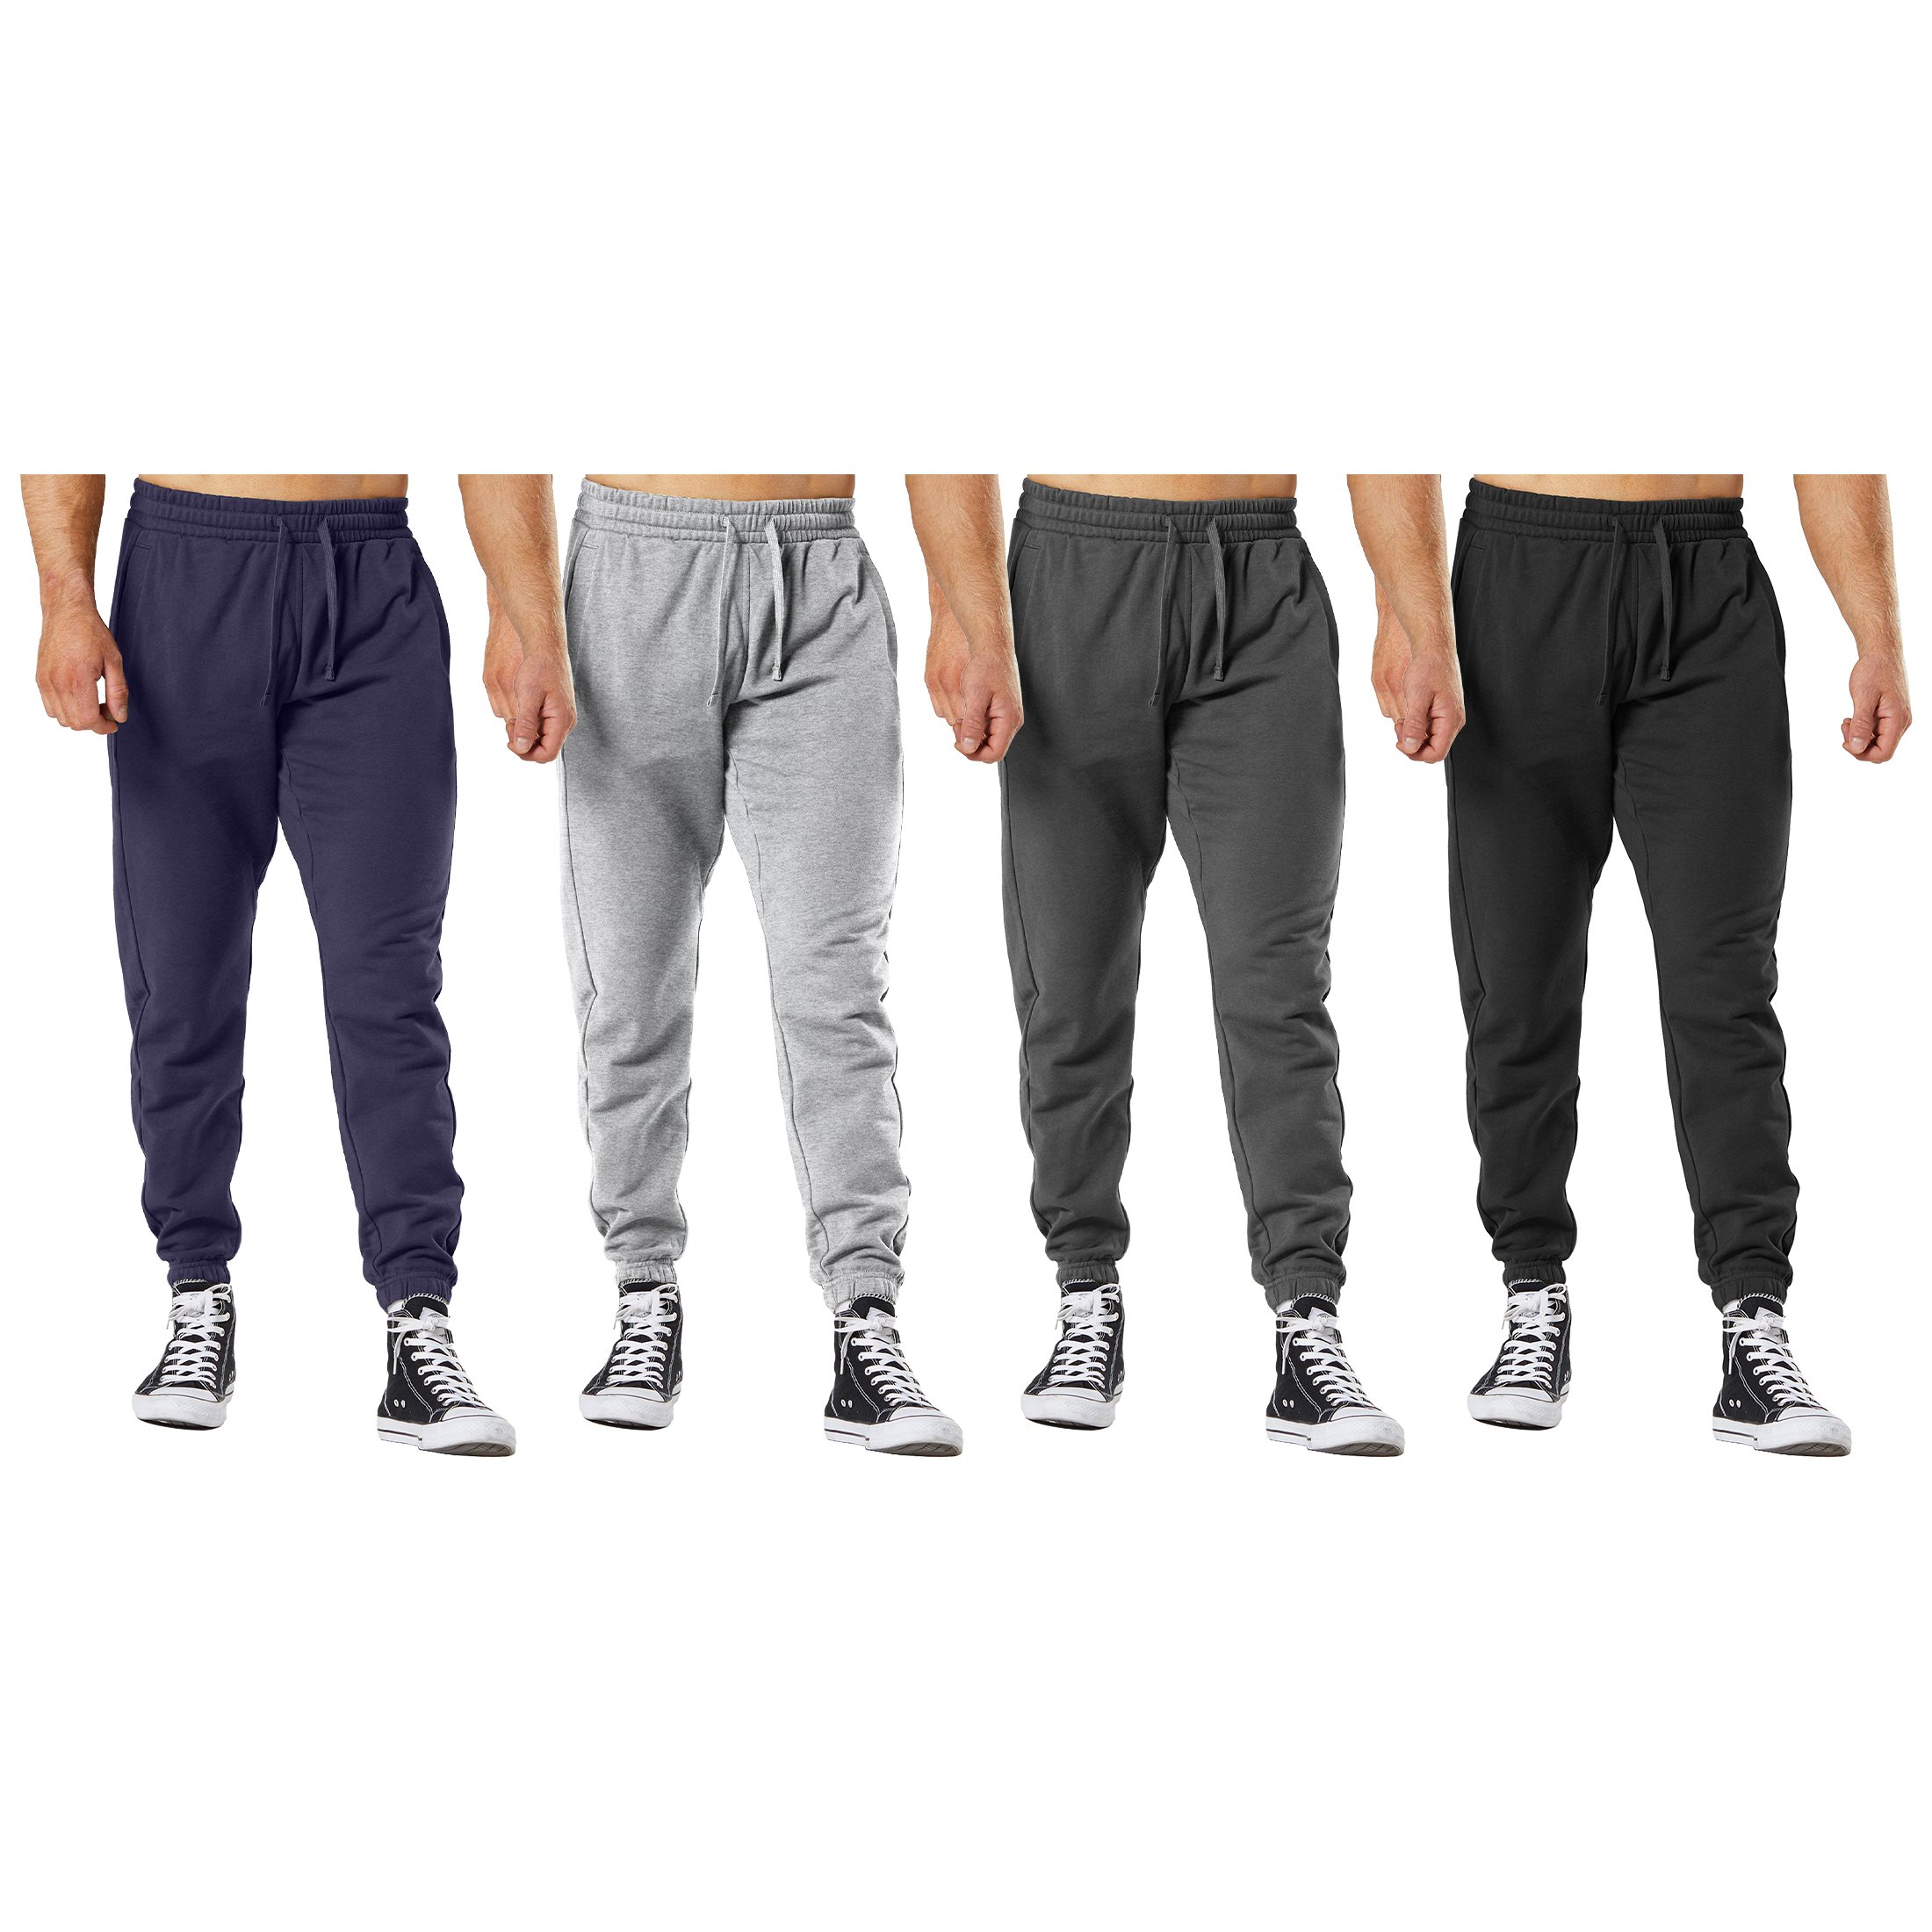 4-Pack: Men's Casual Fleece-Lined Elastic Bottom Jogger Pants With Pockets - Medium